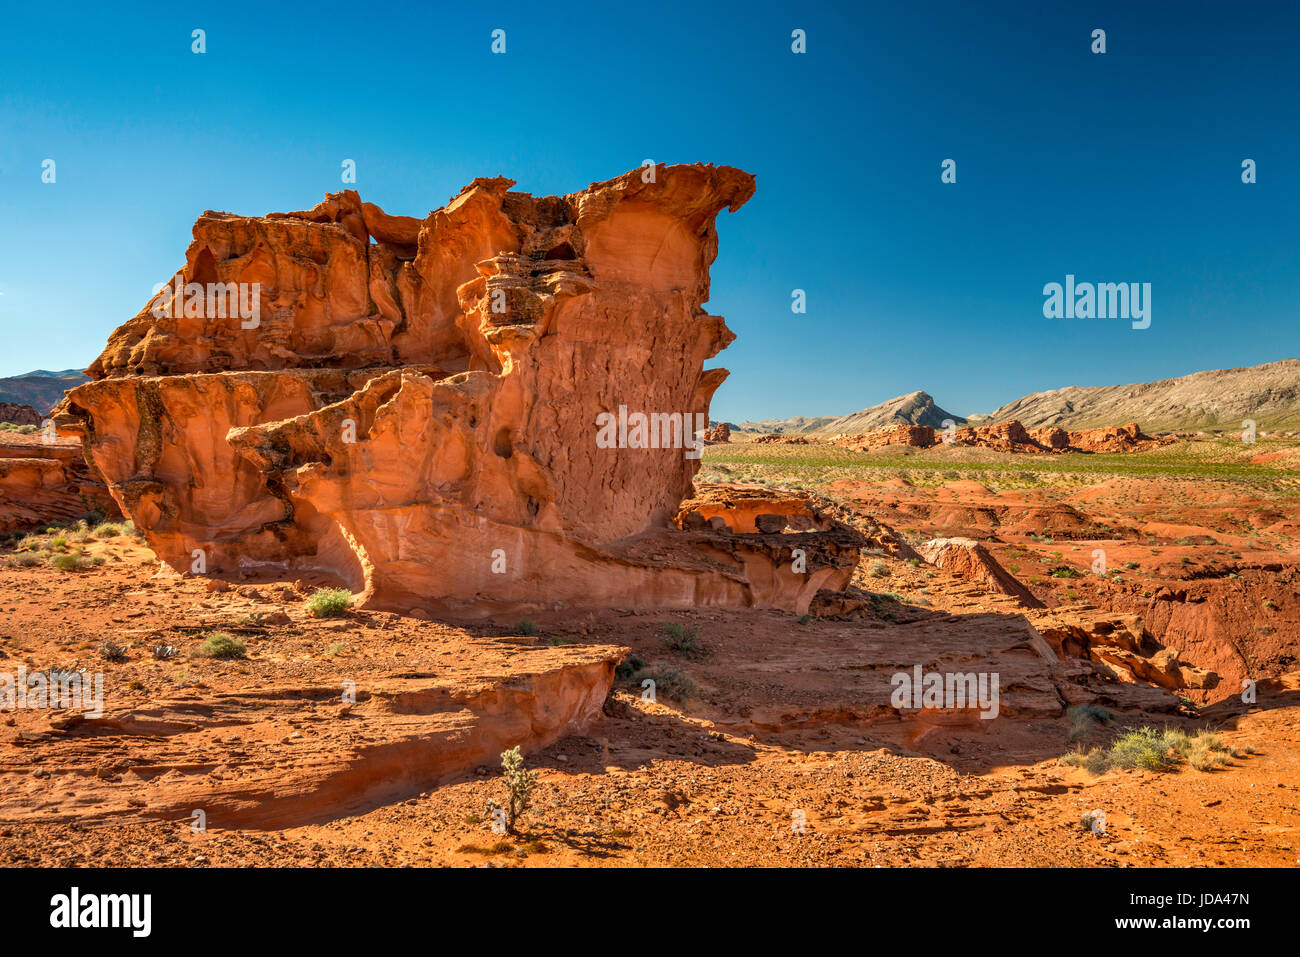 Erodiertes rotes Jurassic Sandstone Gestein, fossile Sanddünen, in Little Finland Area, Gold Butte National Monument, Mojave Desert, Nevada, USA Stockfoto